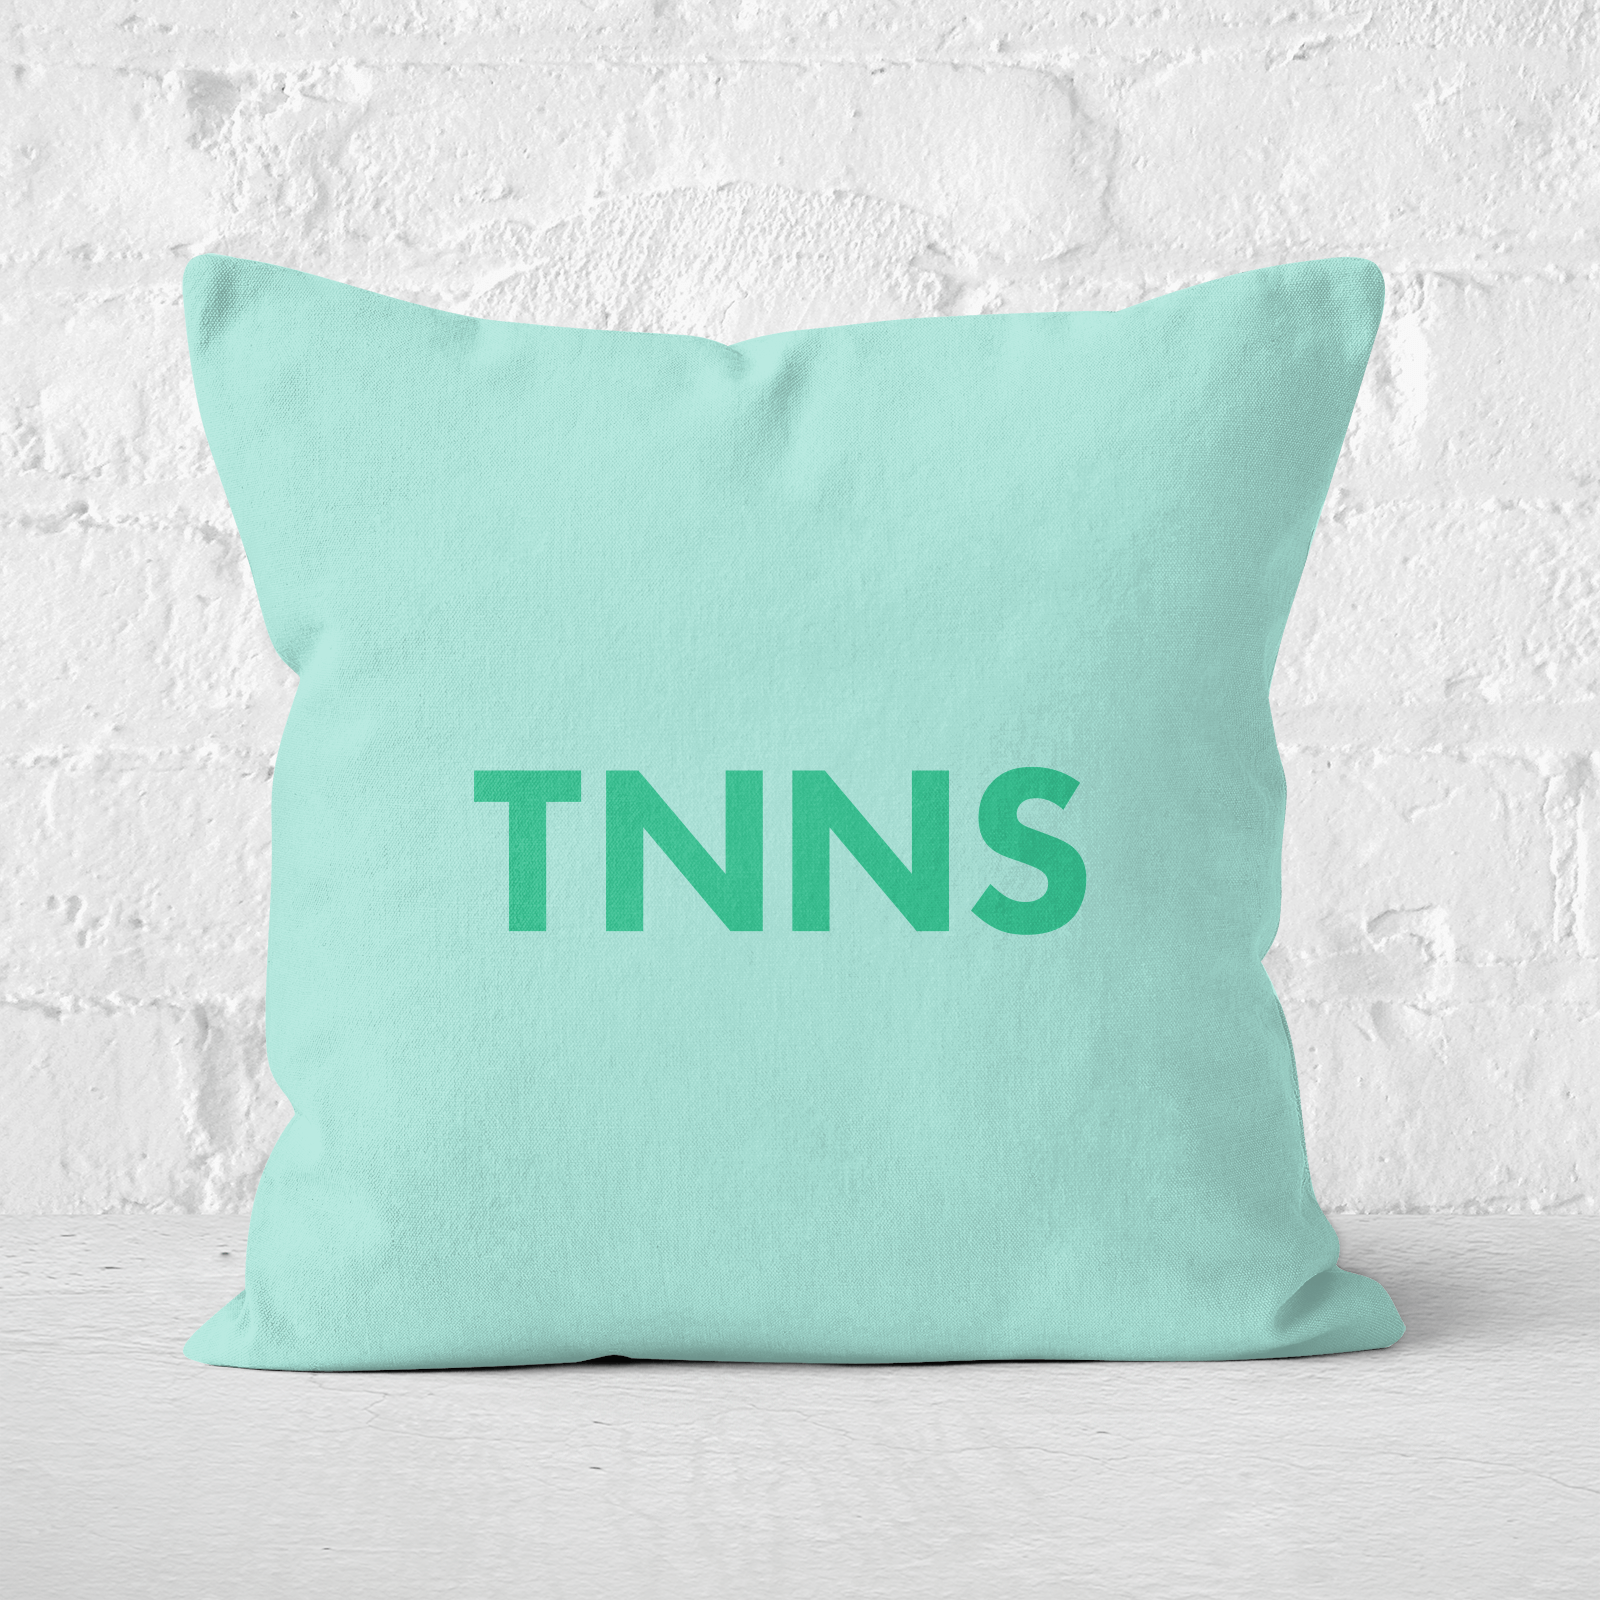 Tnns Square Cushion   60x60cm   Soft Touch